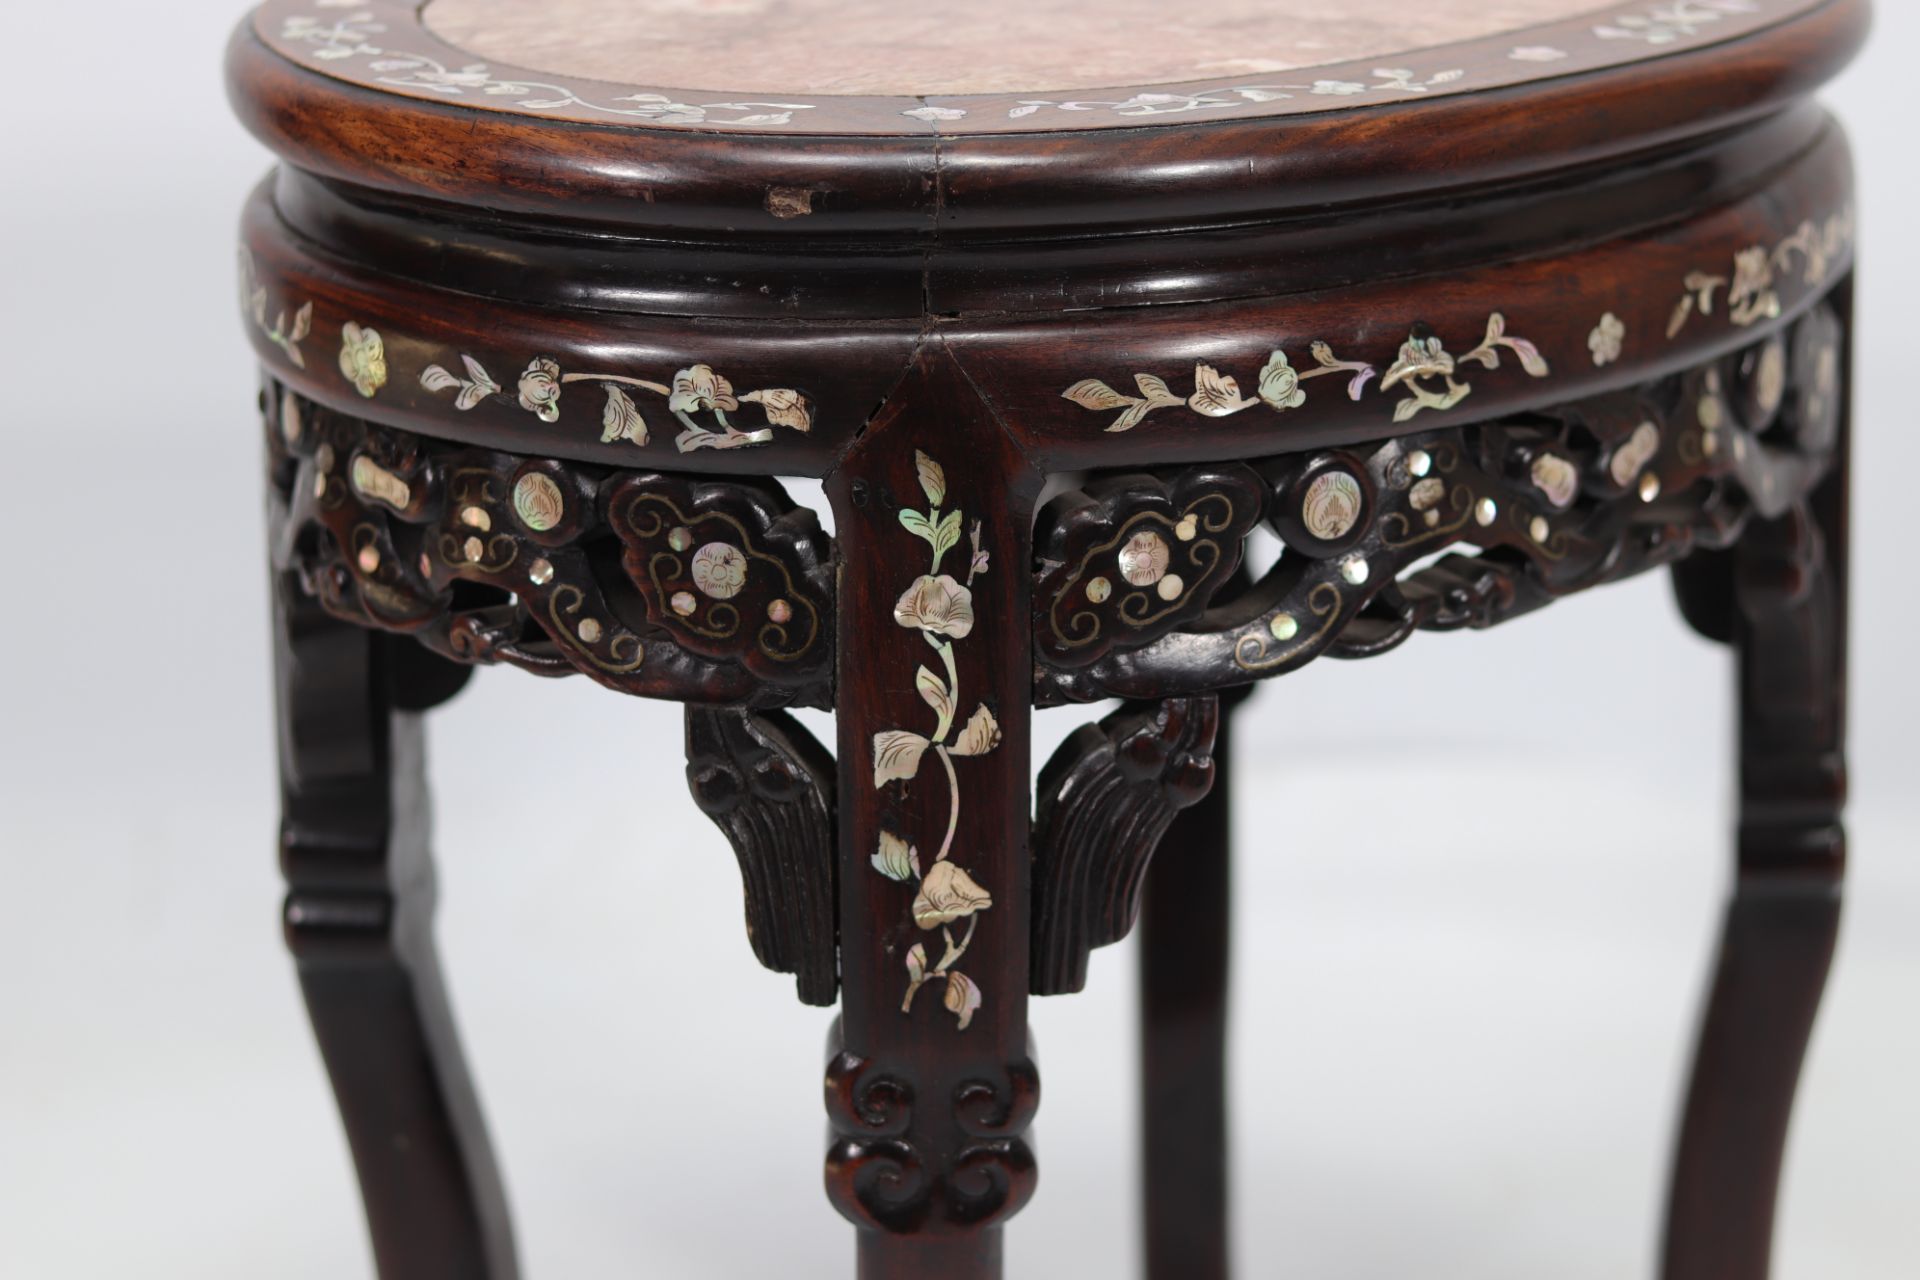 China - Hardwood and mother-of-pearl inlay table for the Peranakan nyonya market, circa 1900. - Image 4 of 4